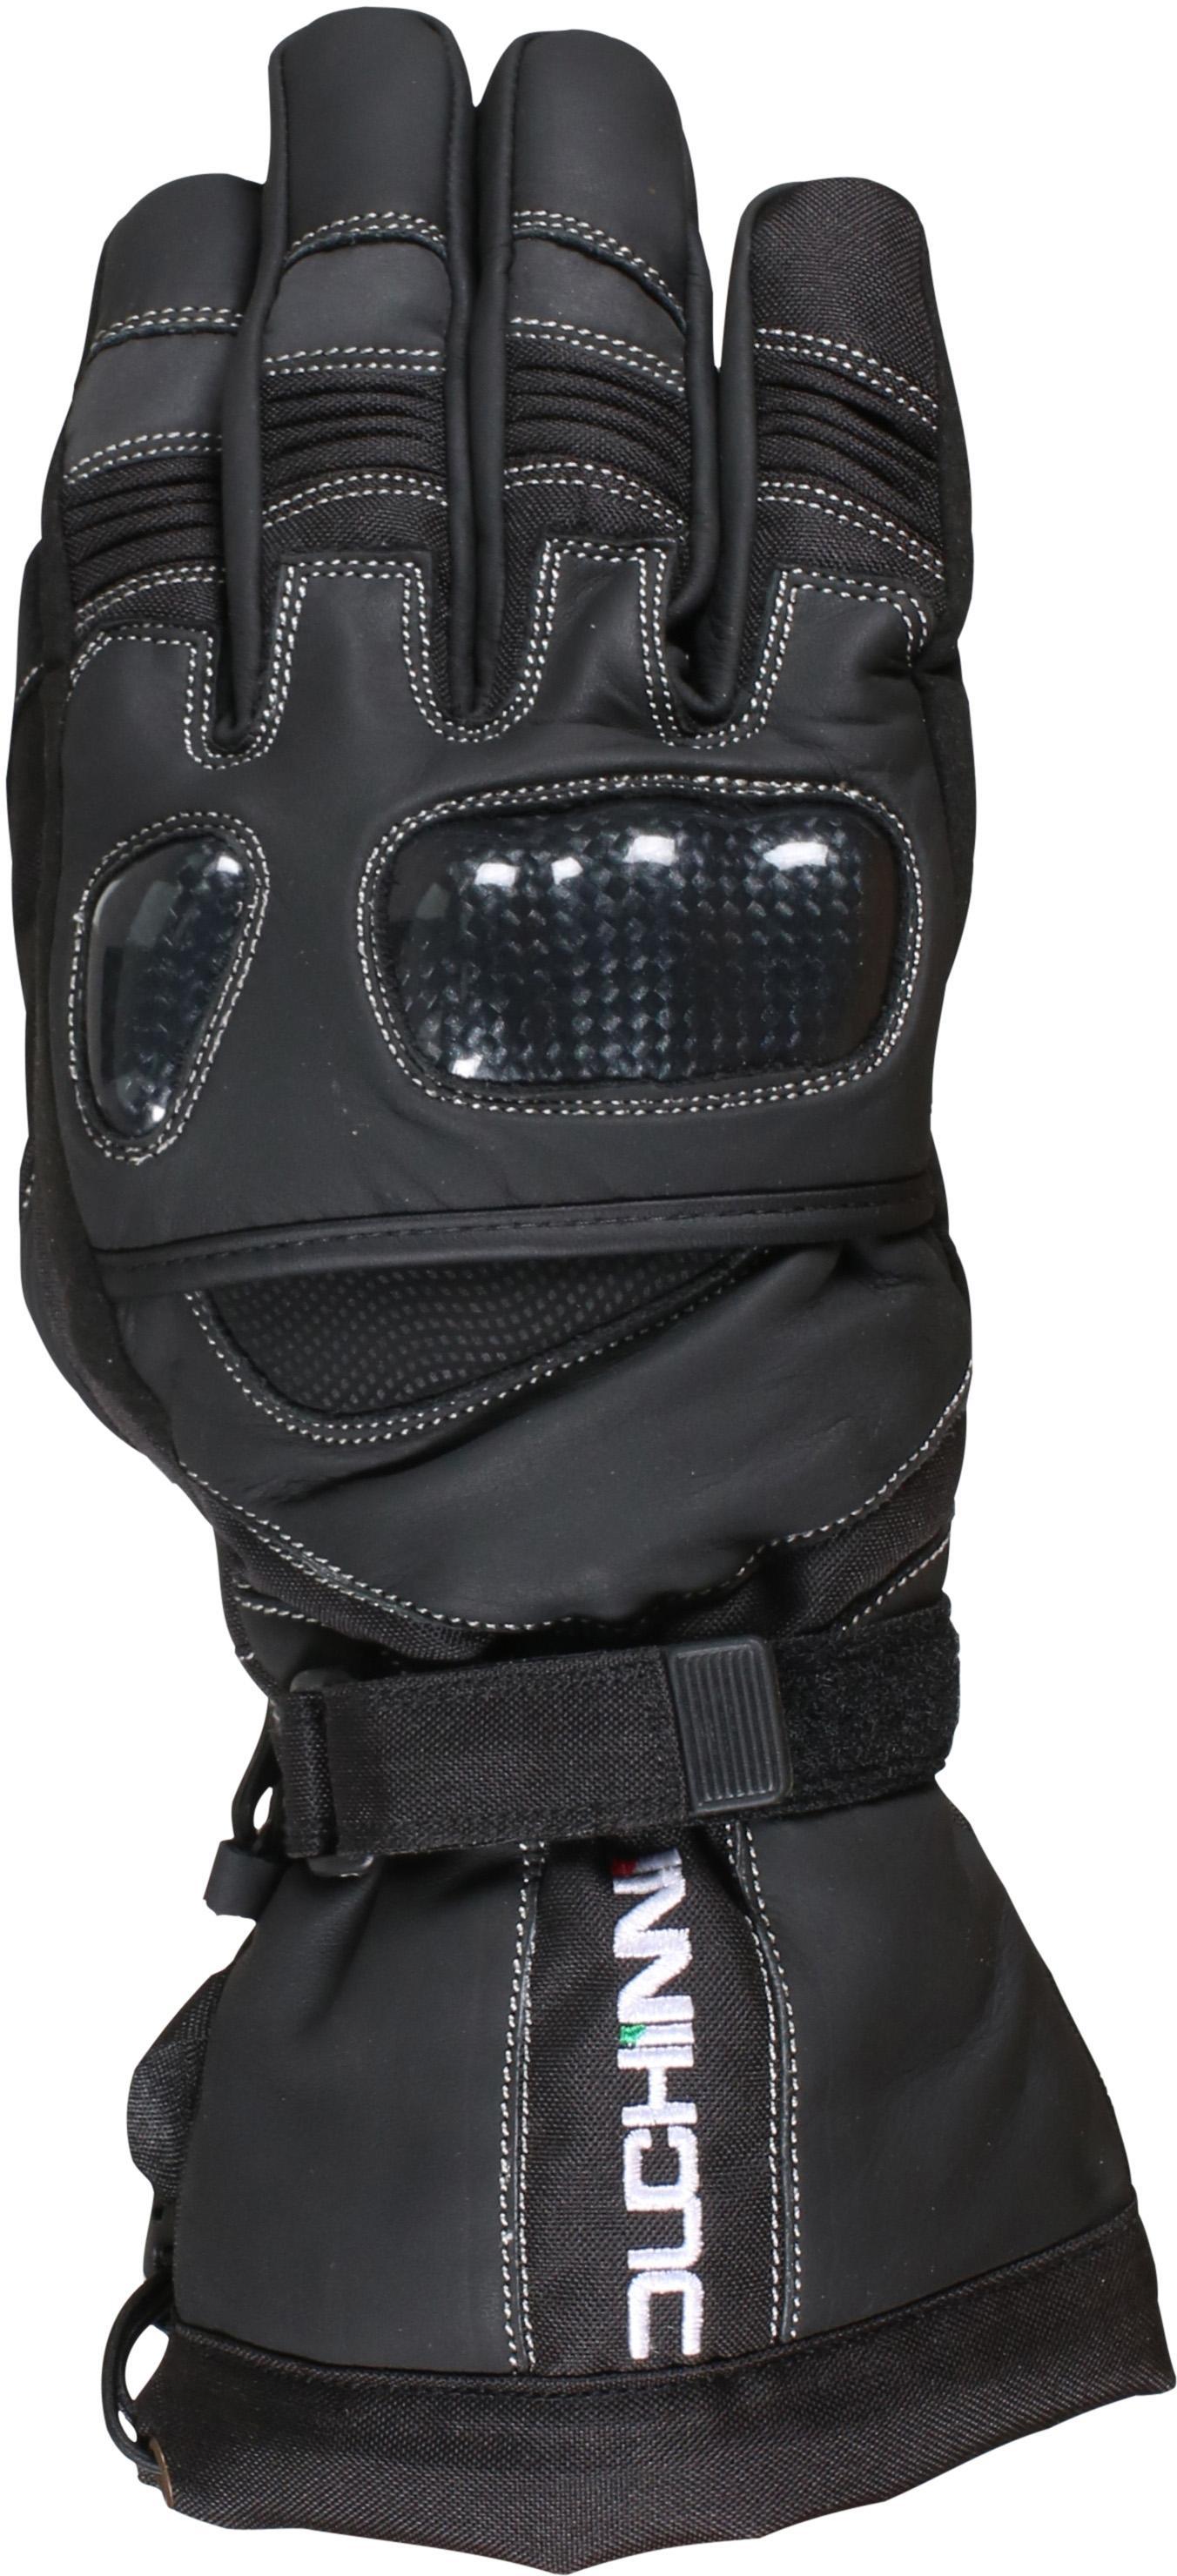 Duchinni Yukon Motorcycle Gloves - Black, L